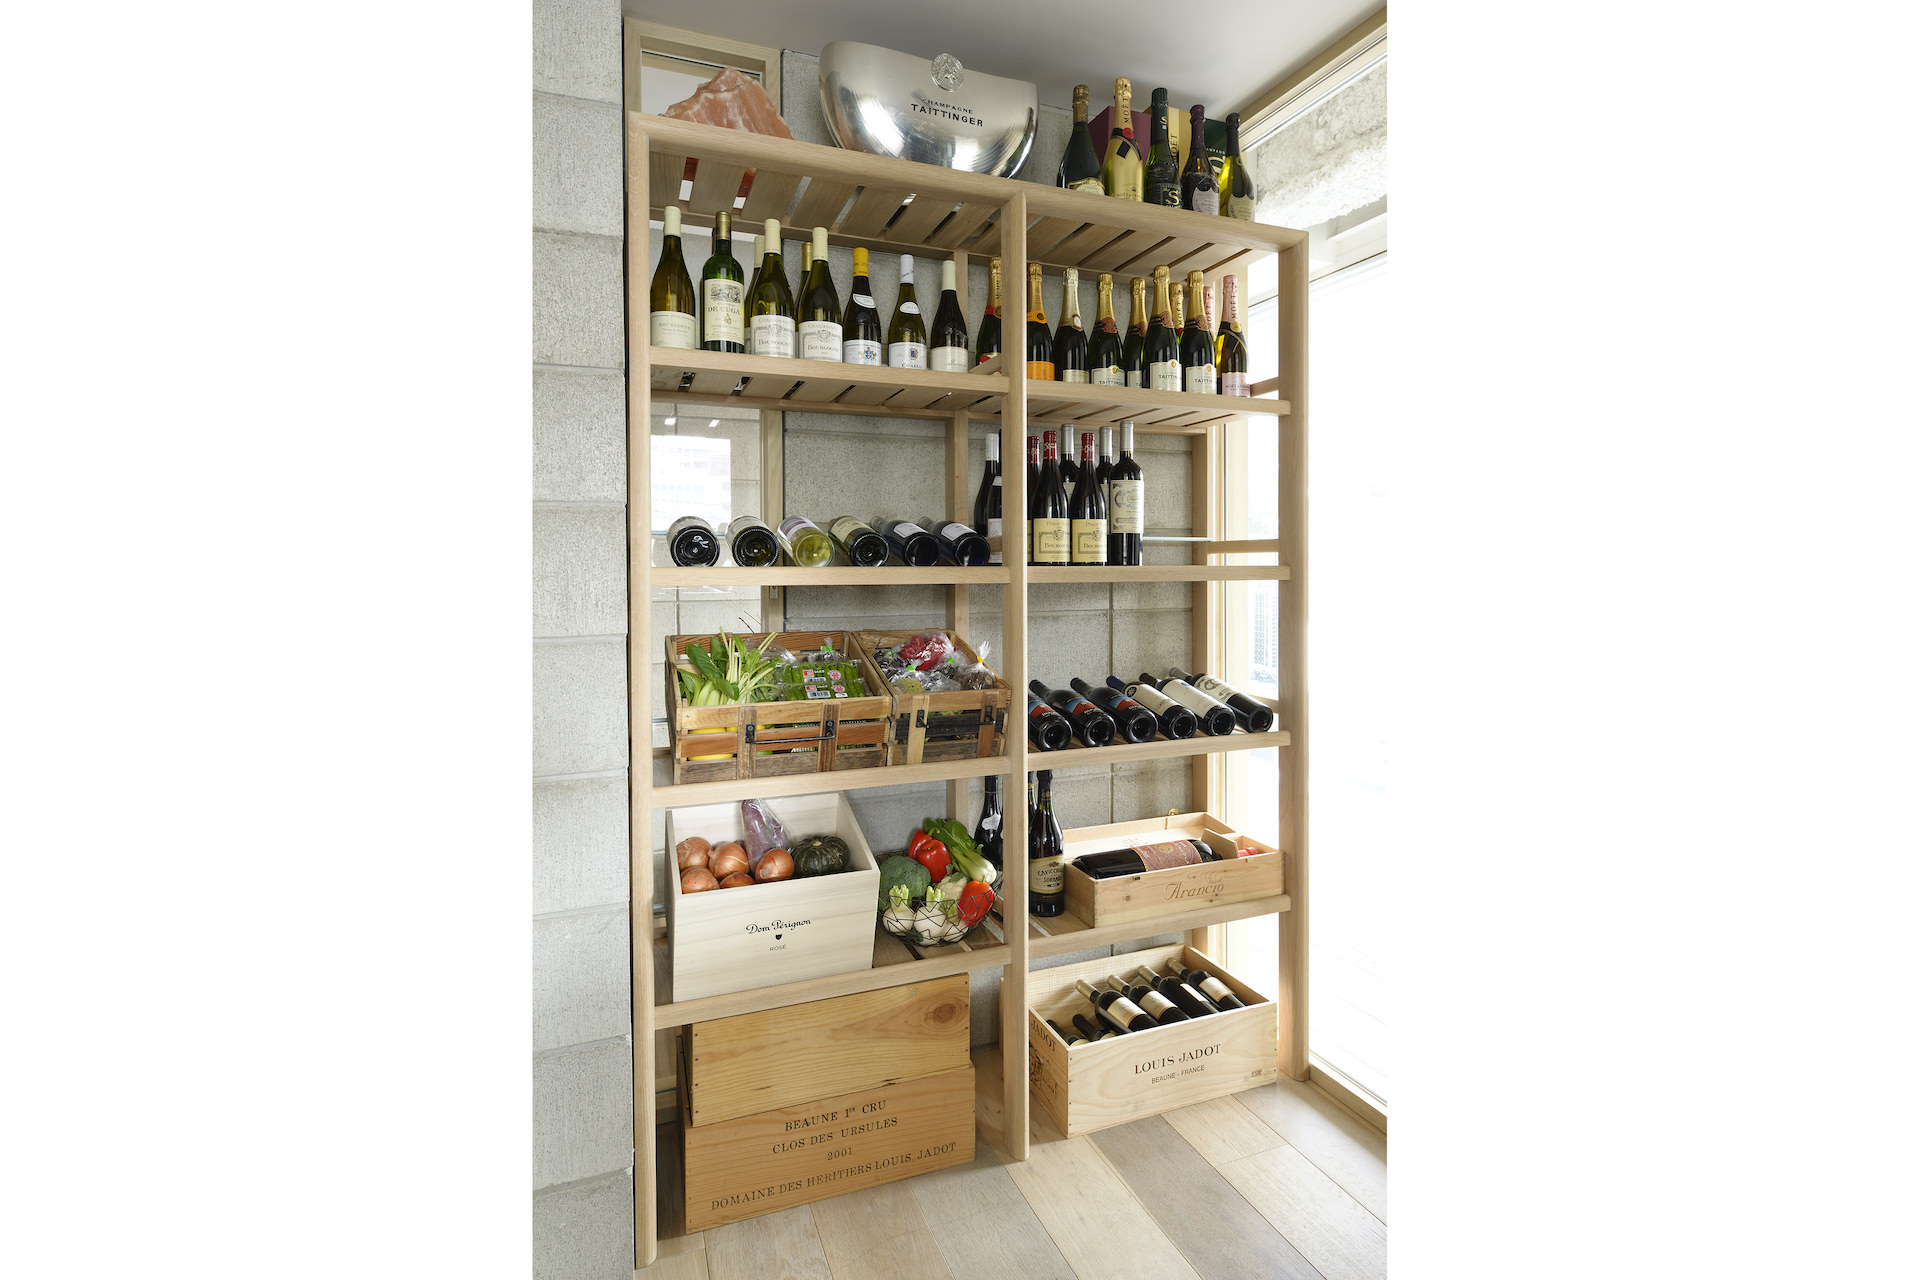 nq table / wine shelf